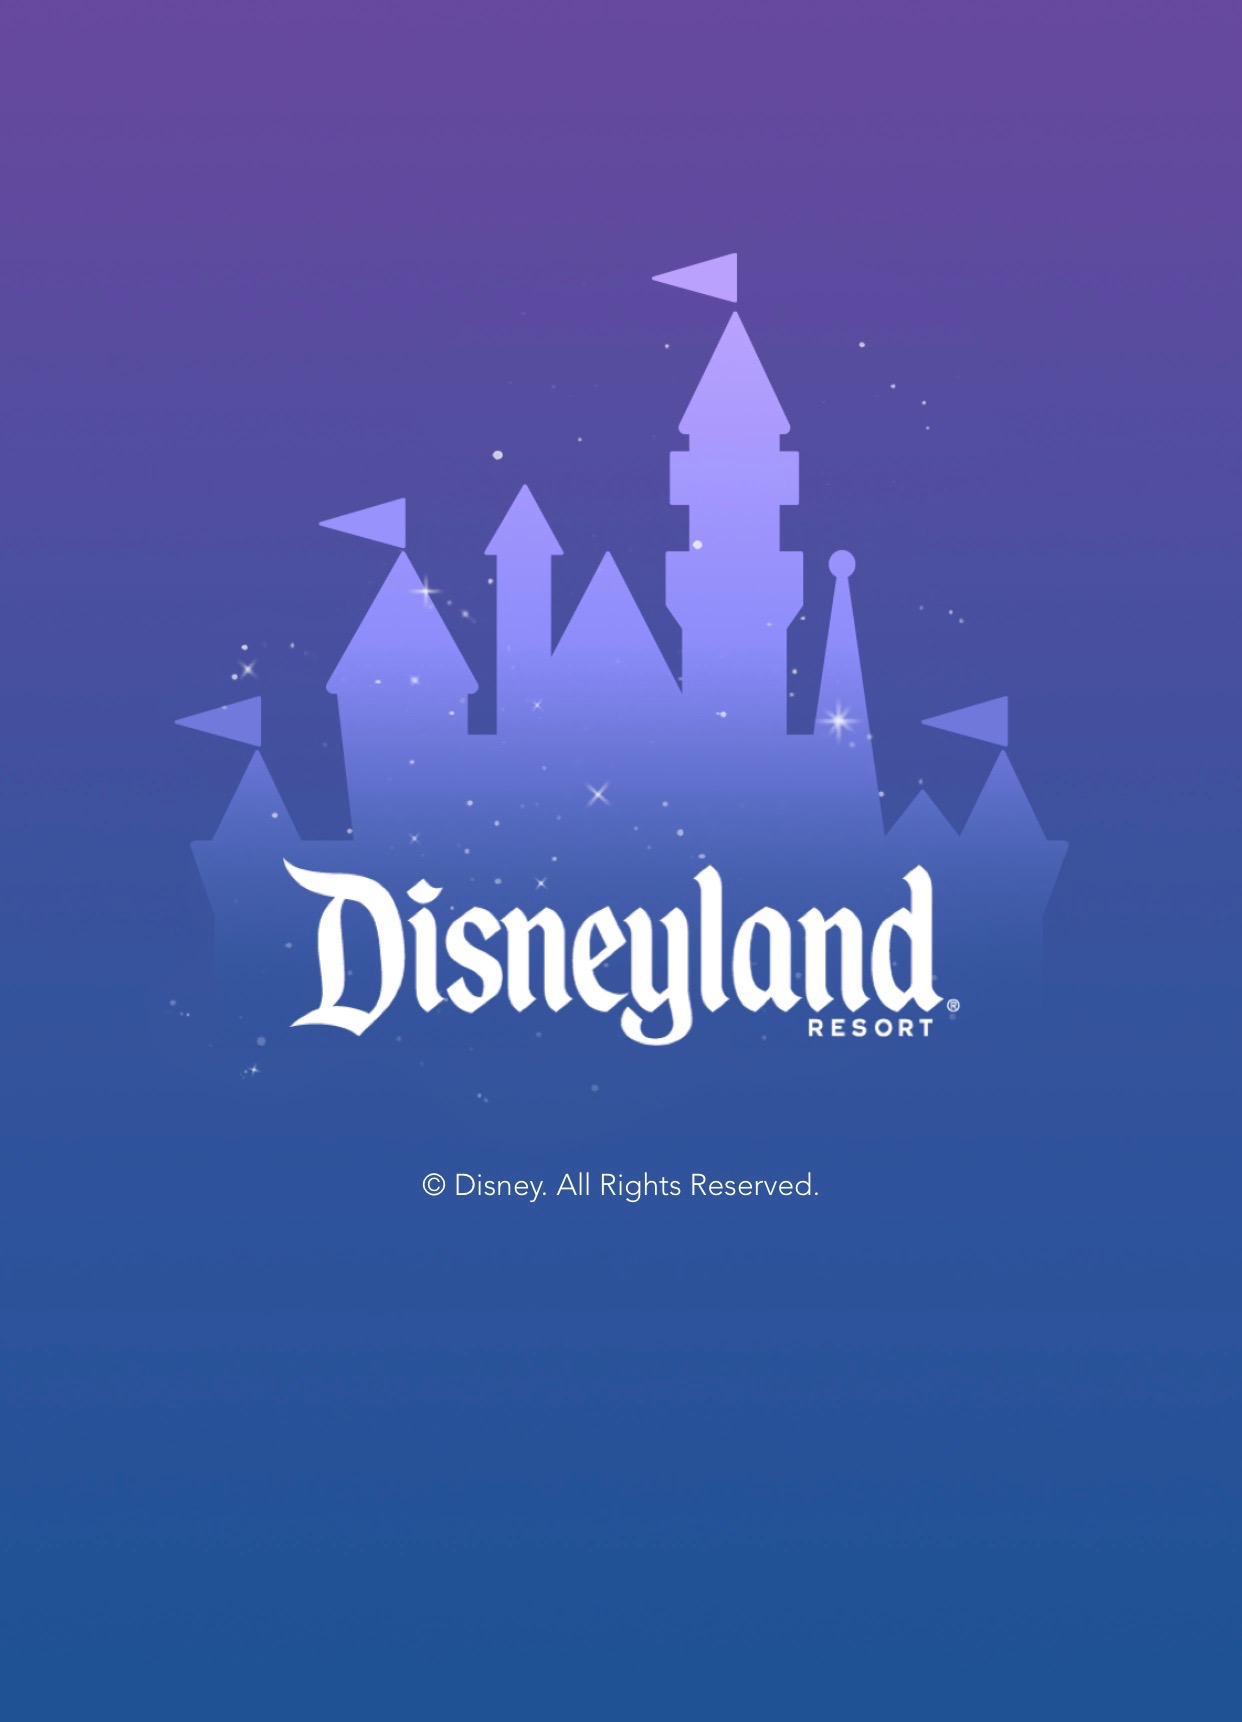 Official Disneyland app background poster